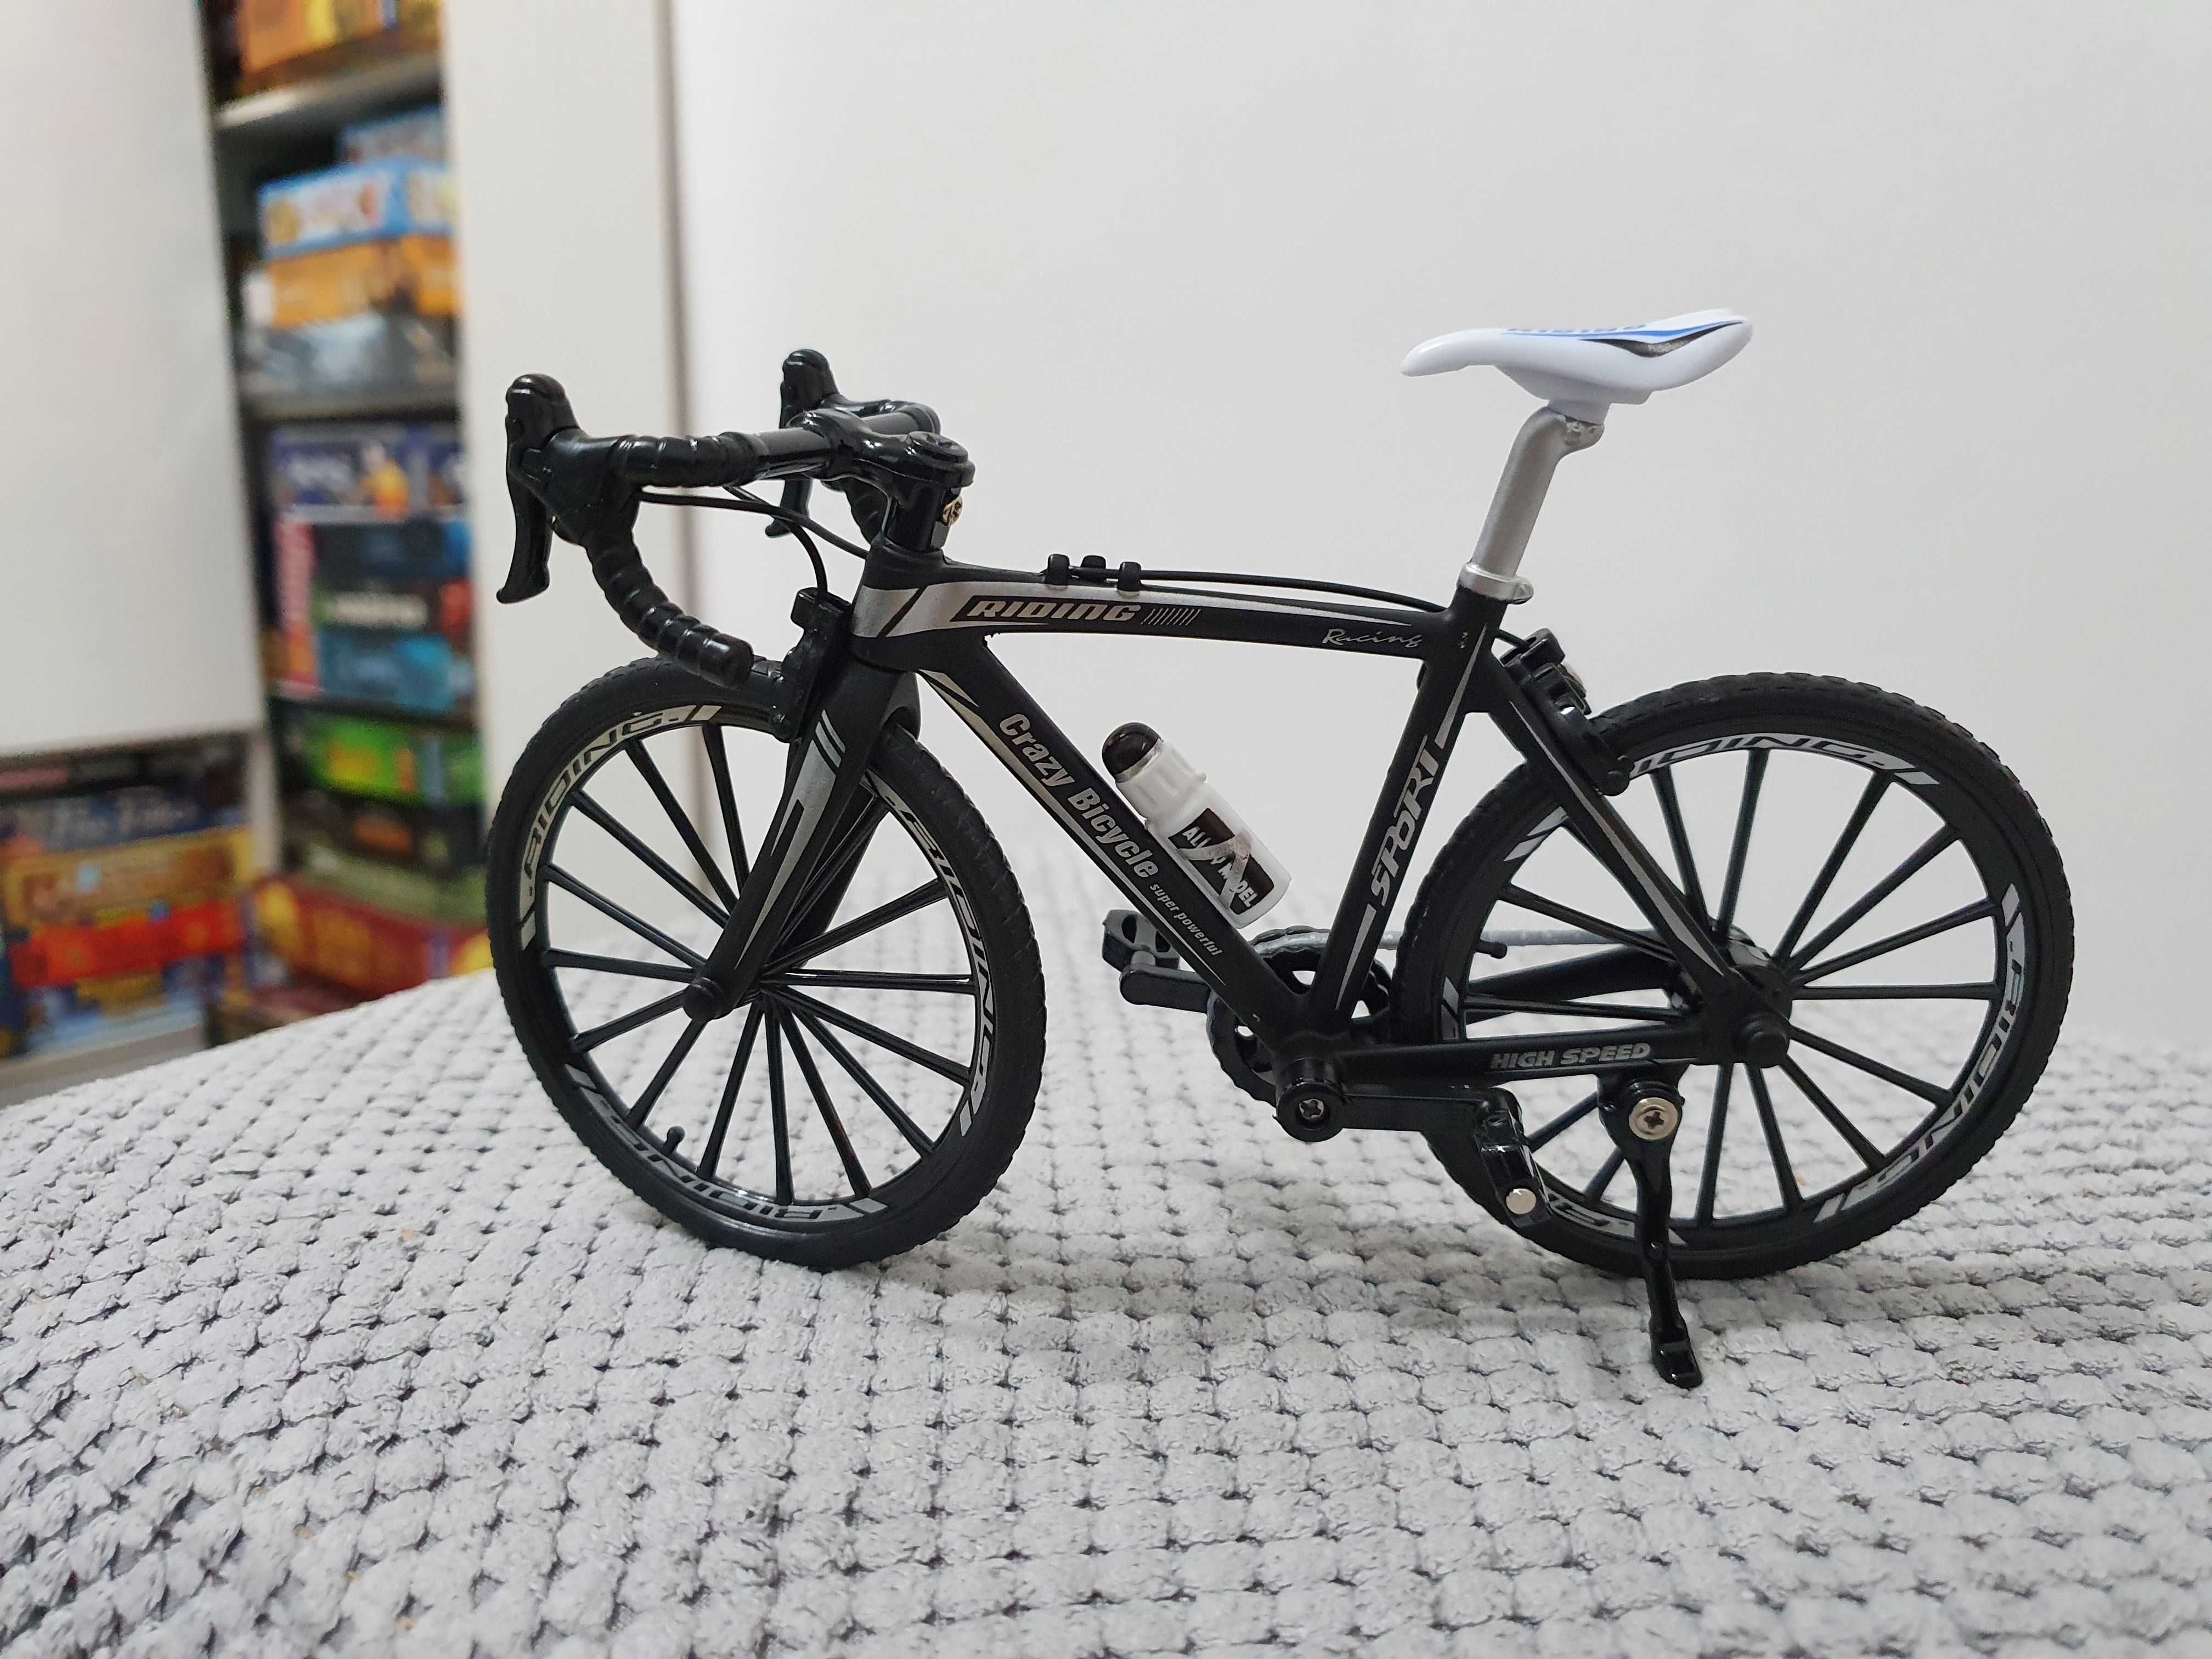 Macheta metalica bicicleta 18 cm diferite modele